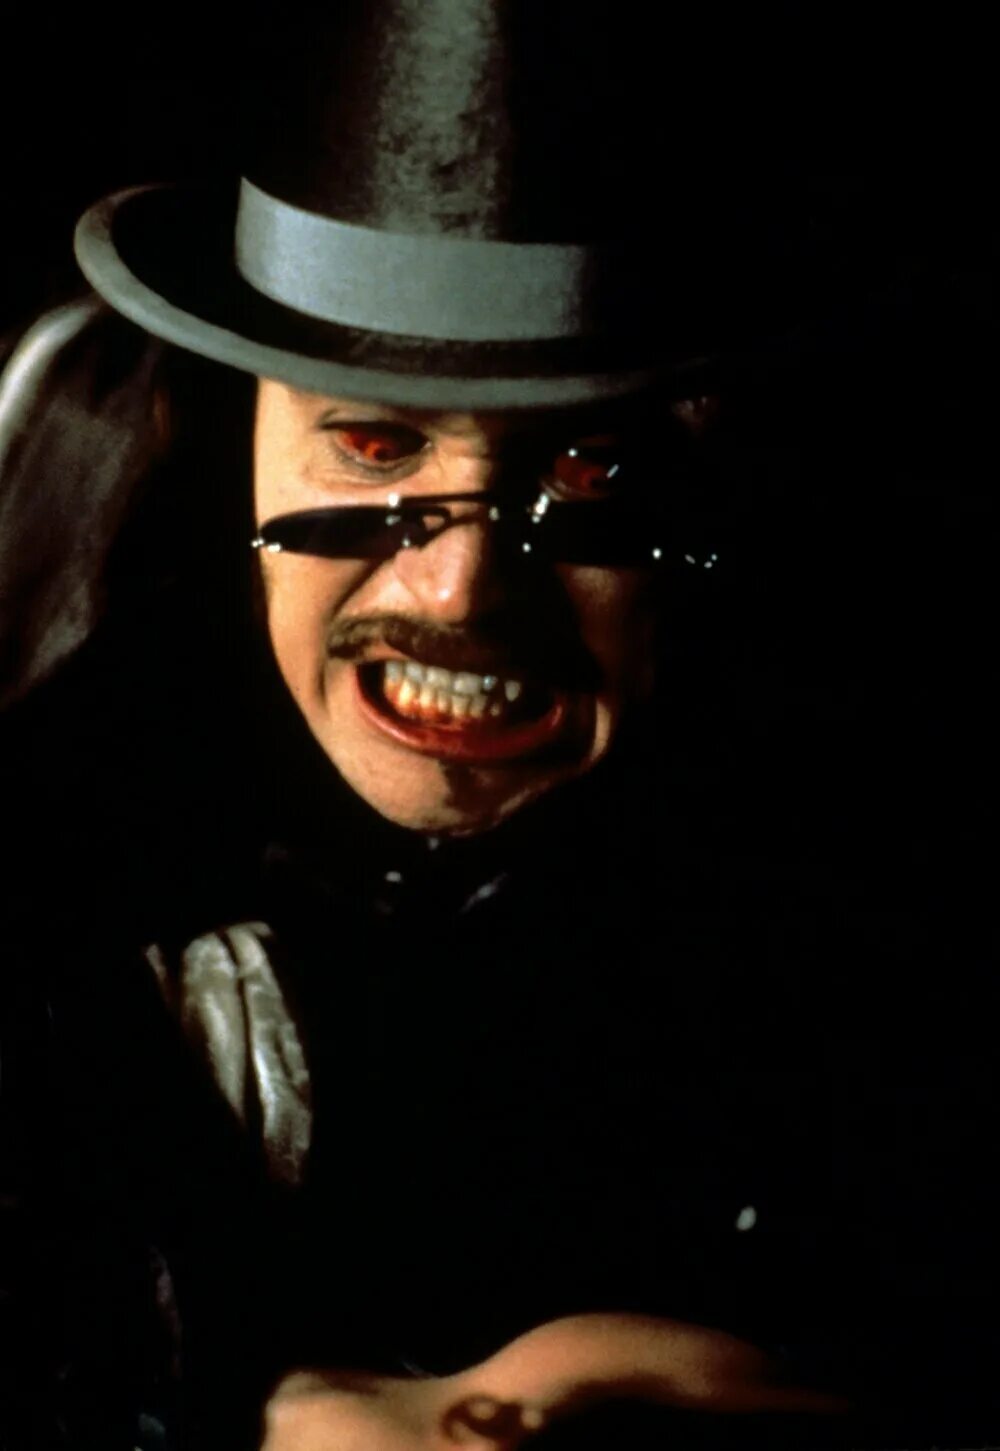 Дракула стокера 1992. Гари Олдман 1992. Bram Stroker's Dracula (1992) Gary oldman. Гэри Олдман Дракула.